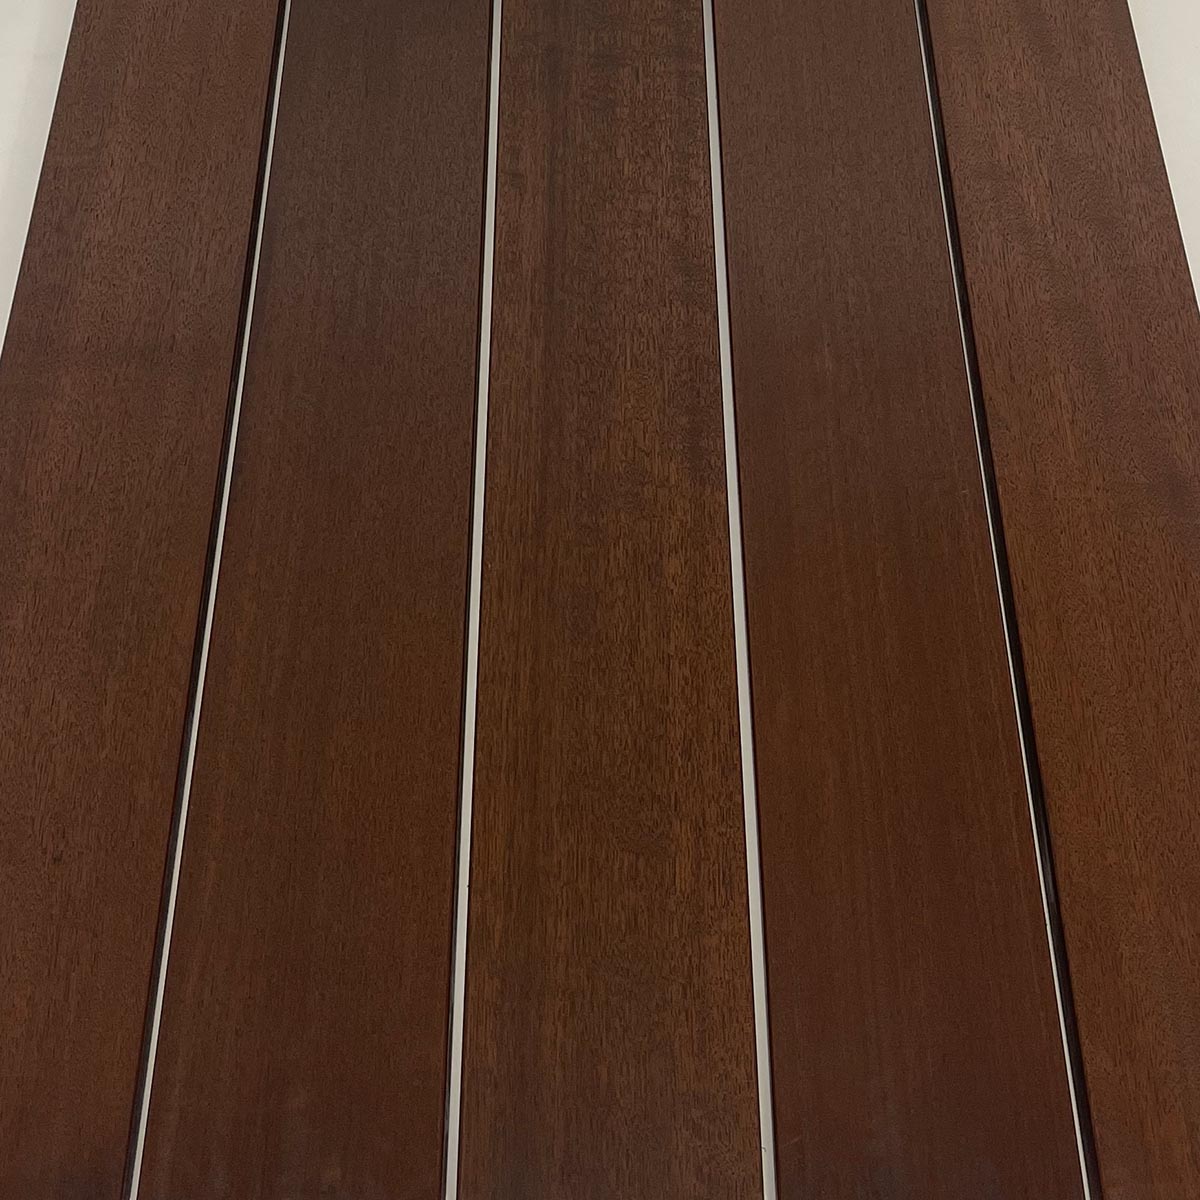 Torem Deck Boards with ExoShield Black Walnut Wood Stain